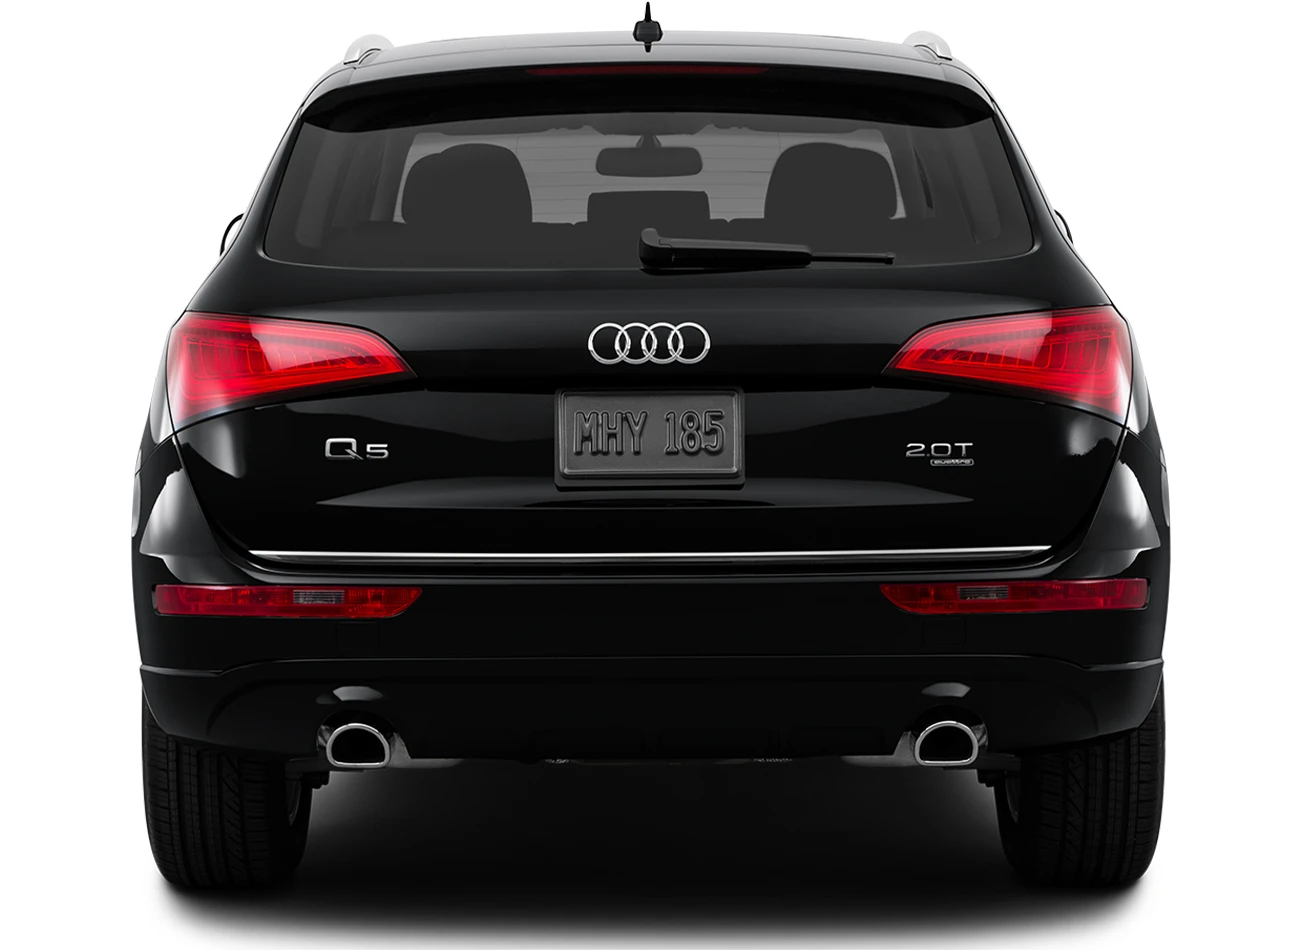 2015 Audi Q5 Review: Reviews, Photos, and More: Reasons to Buy #2 | CarMax